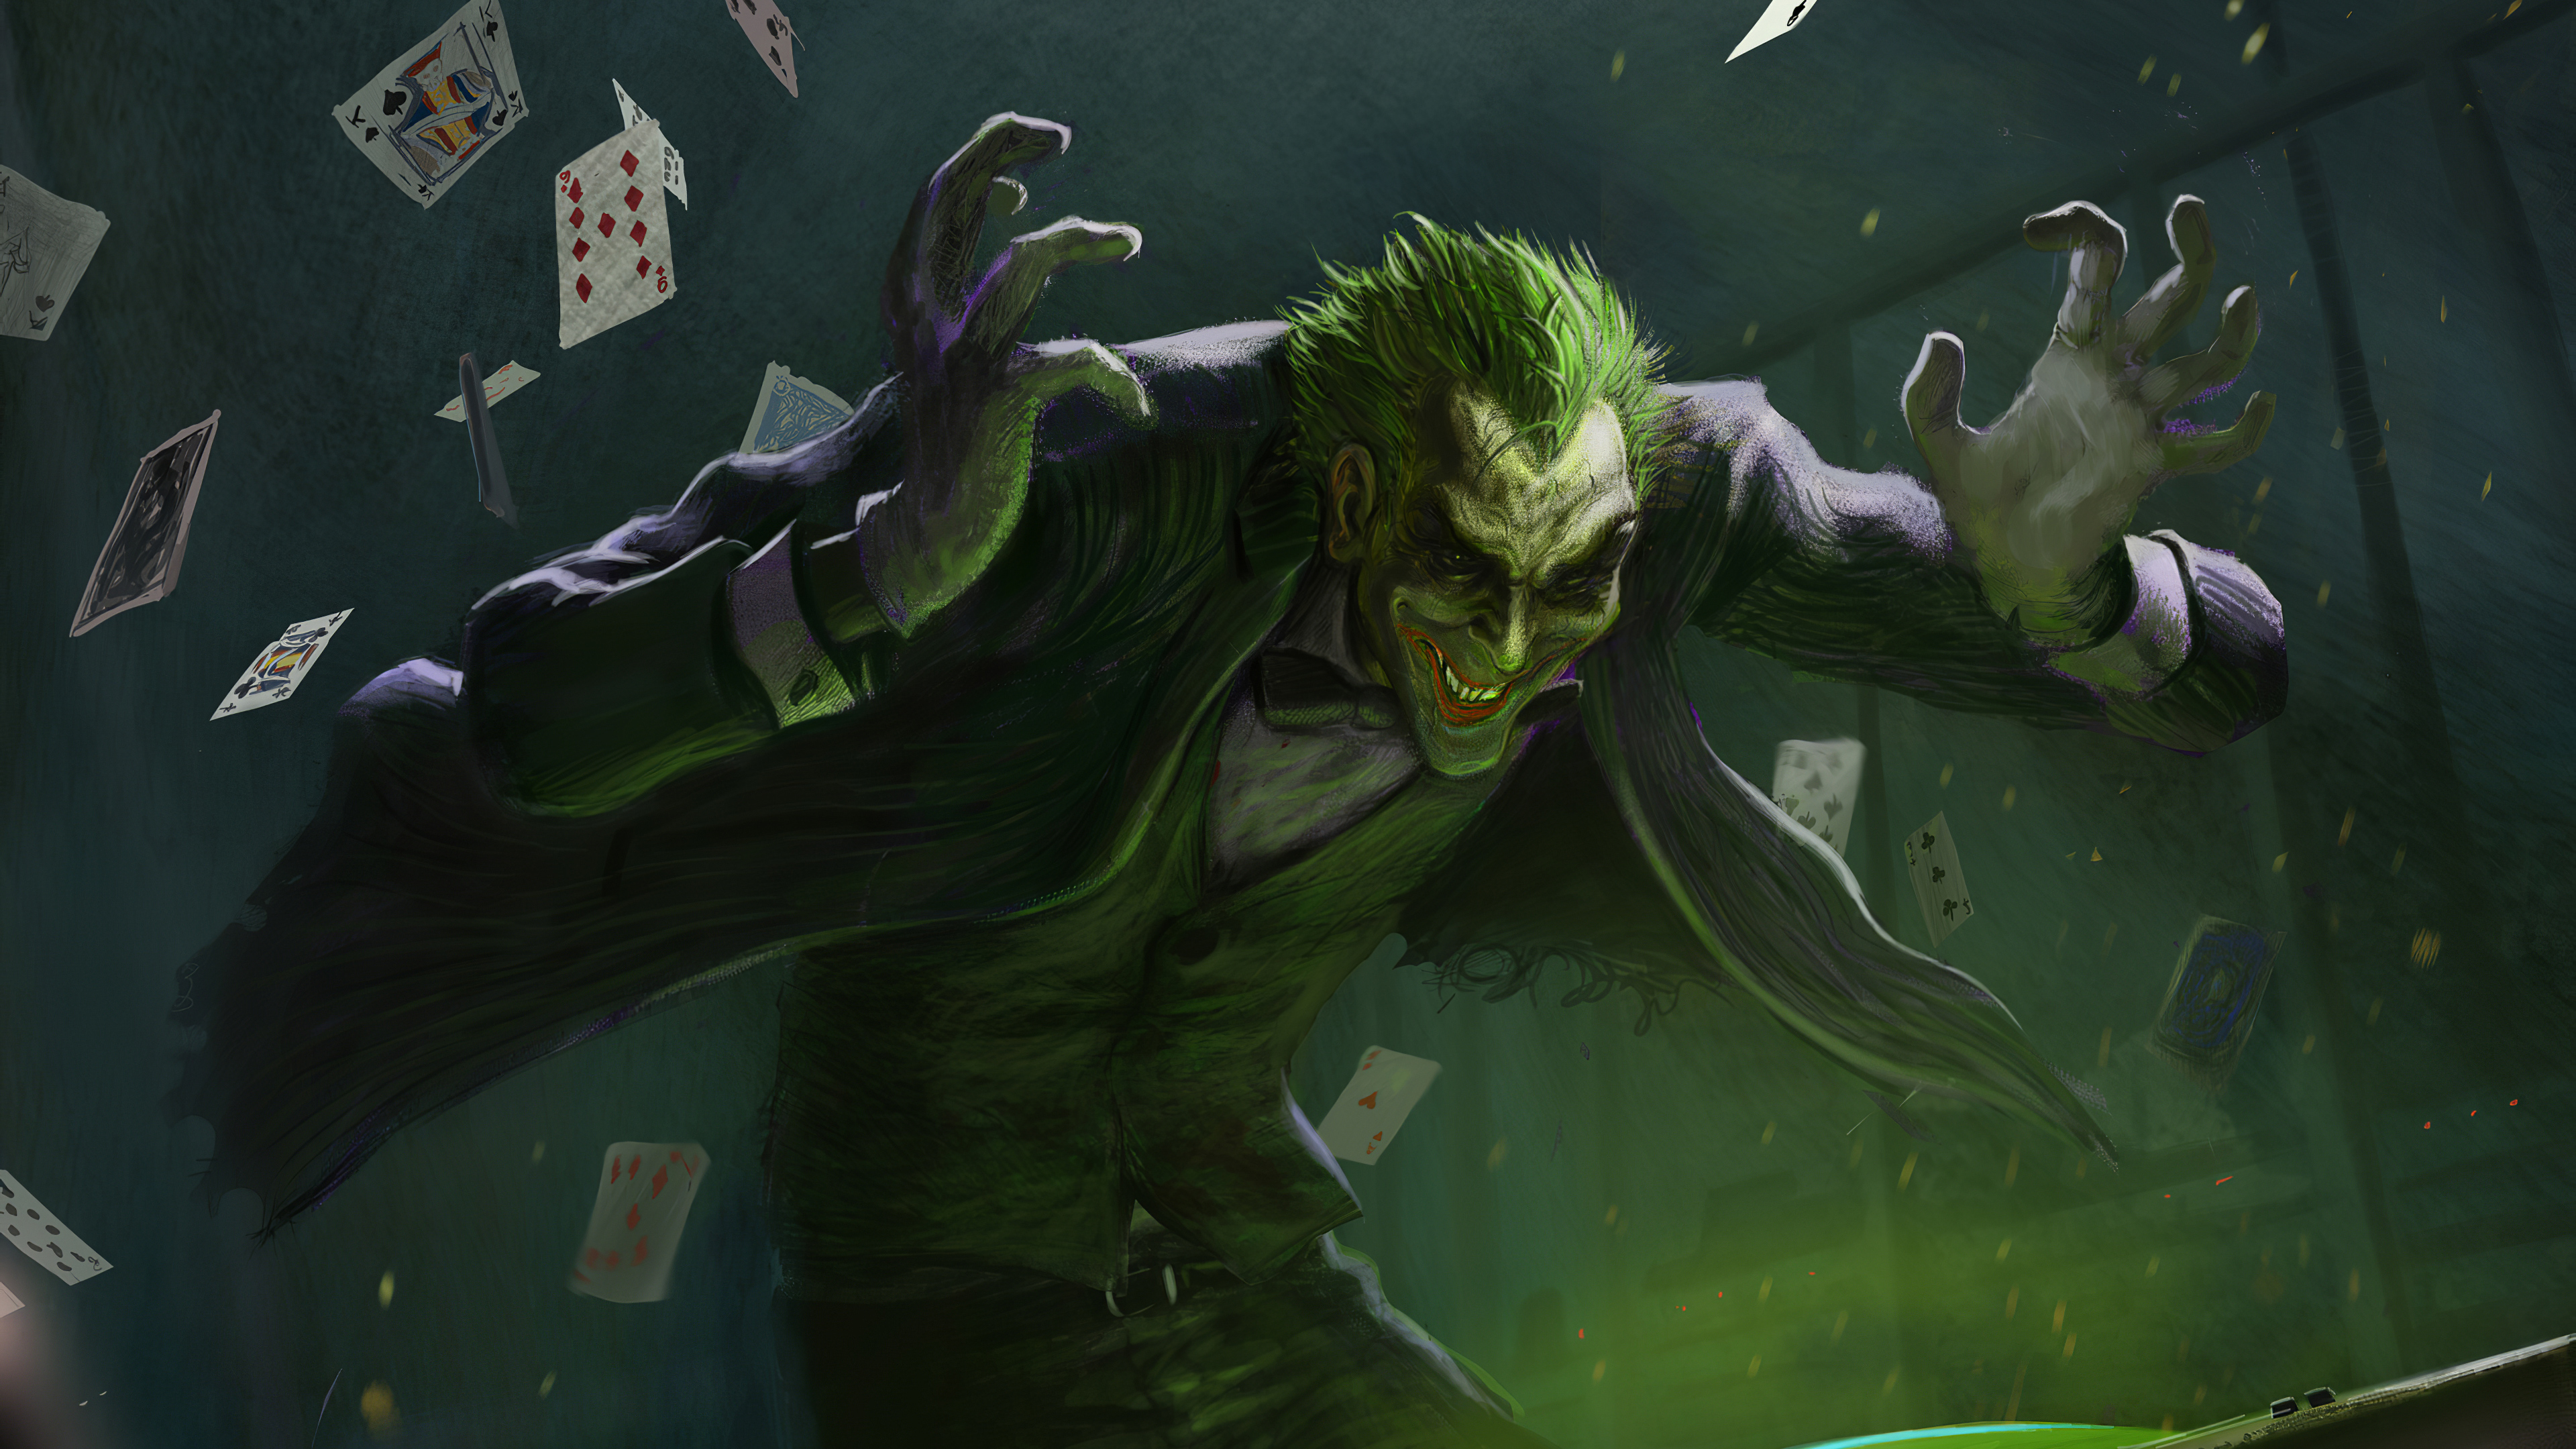 Green Joker Wallpapers